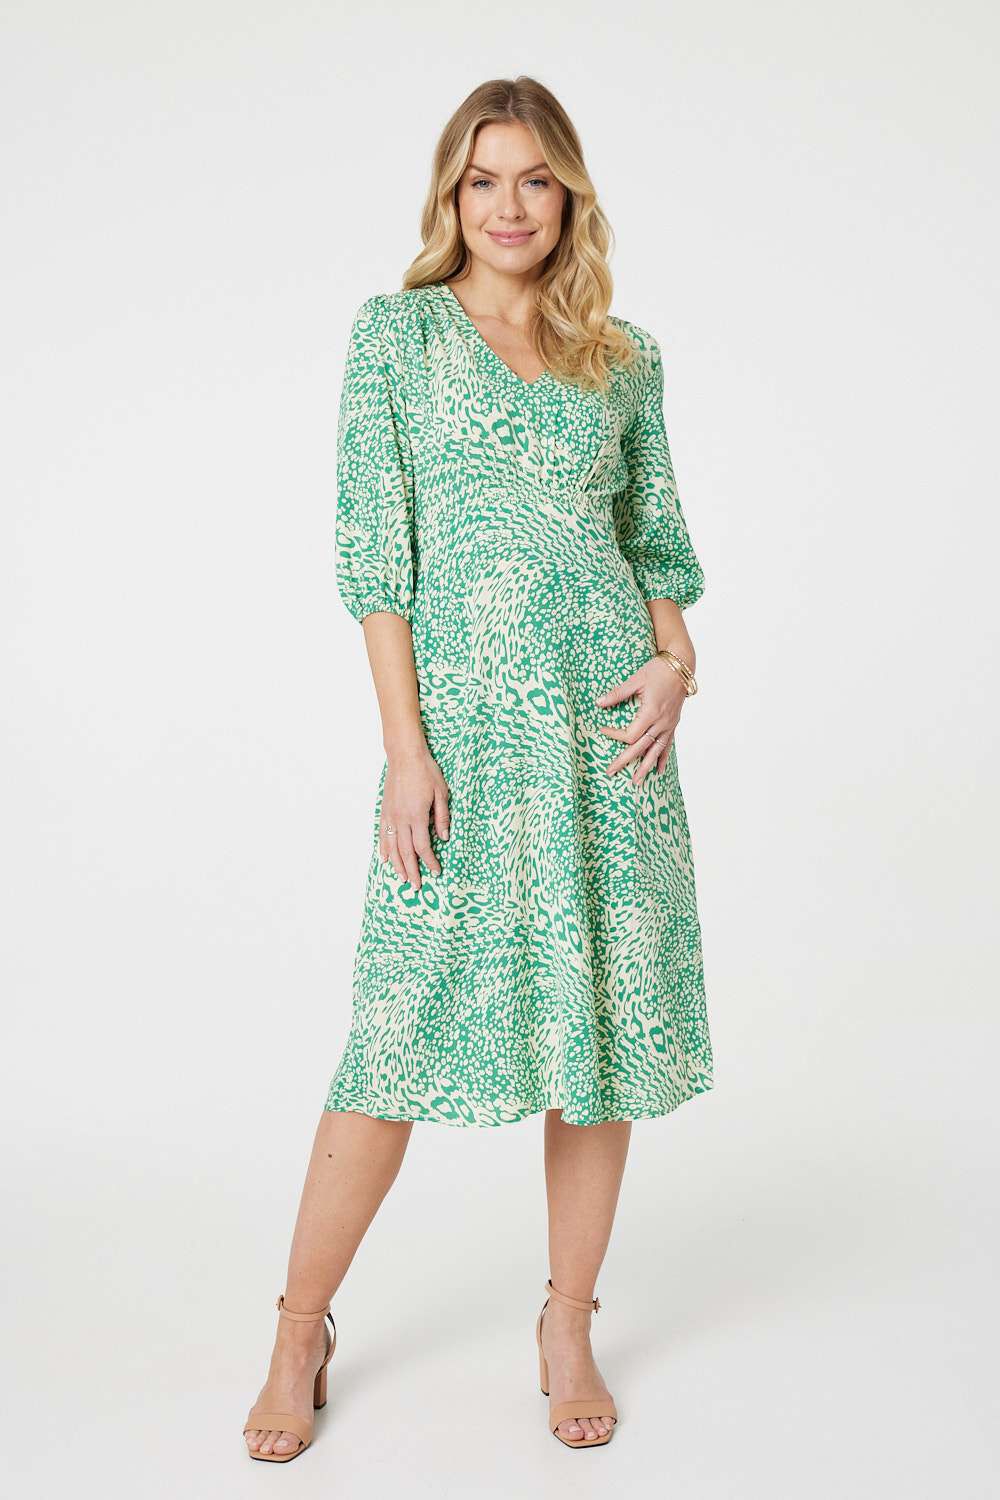 Izabel London Green - Animal Print Slim Fit Midi Dress, Size: 12